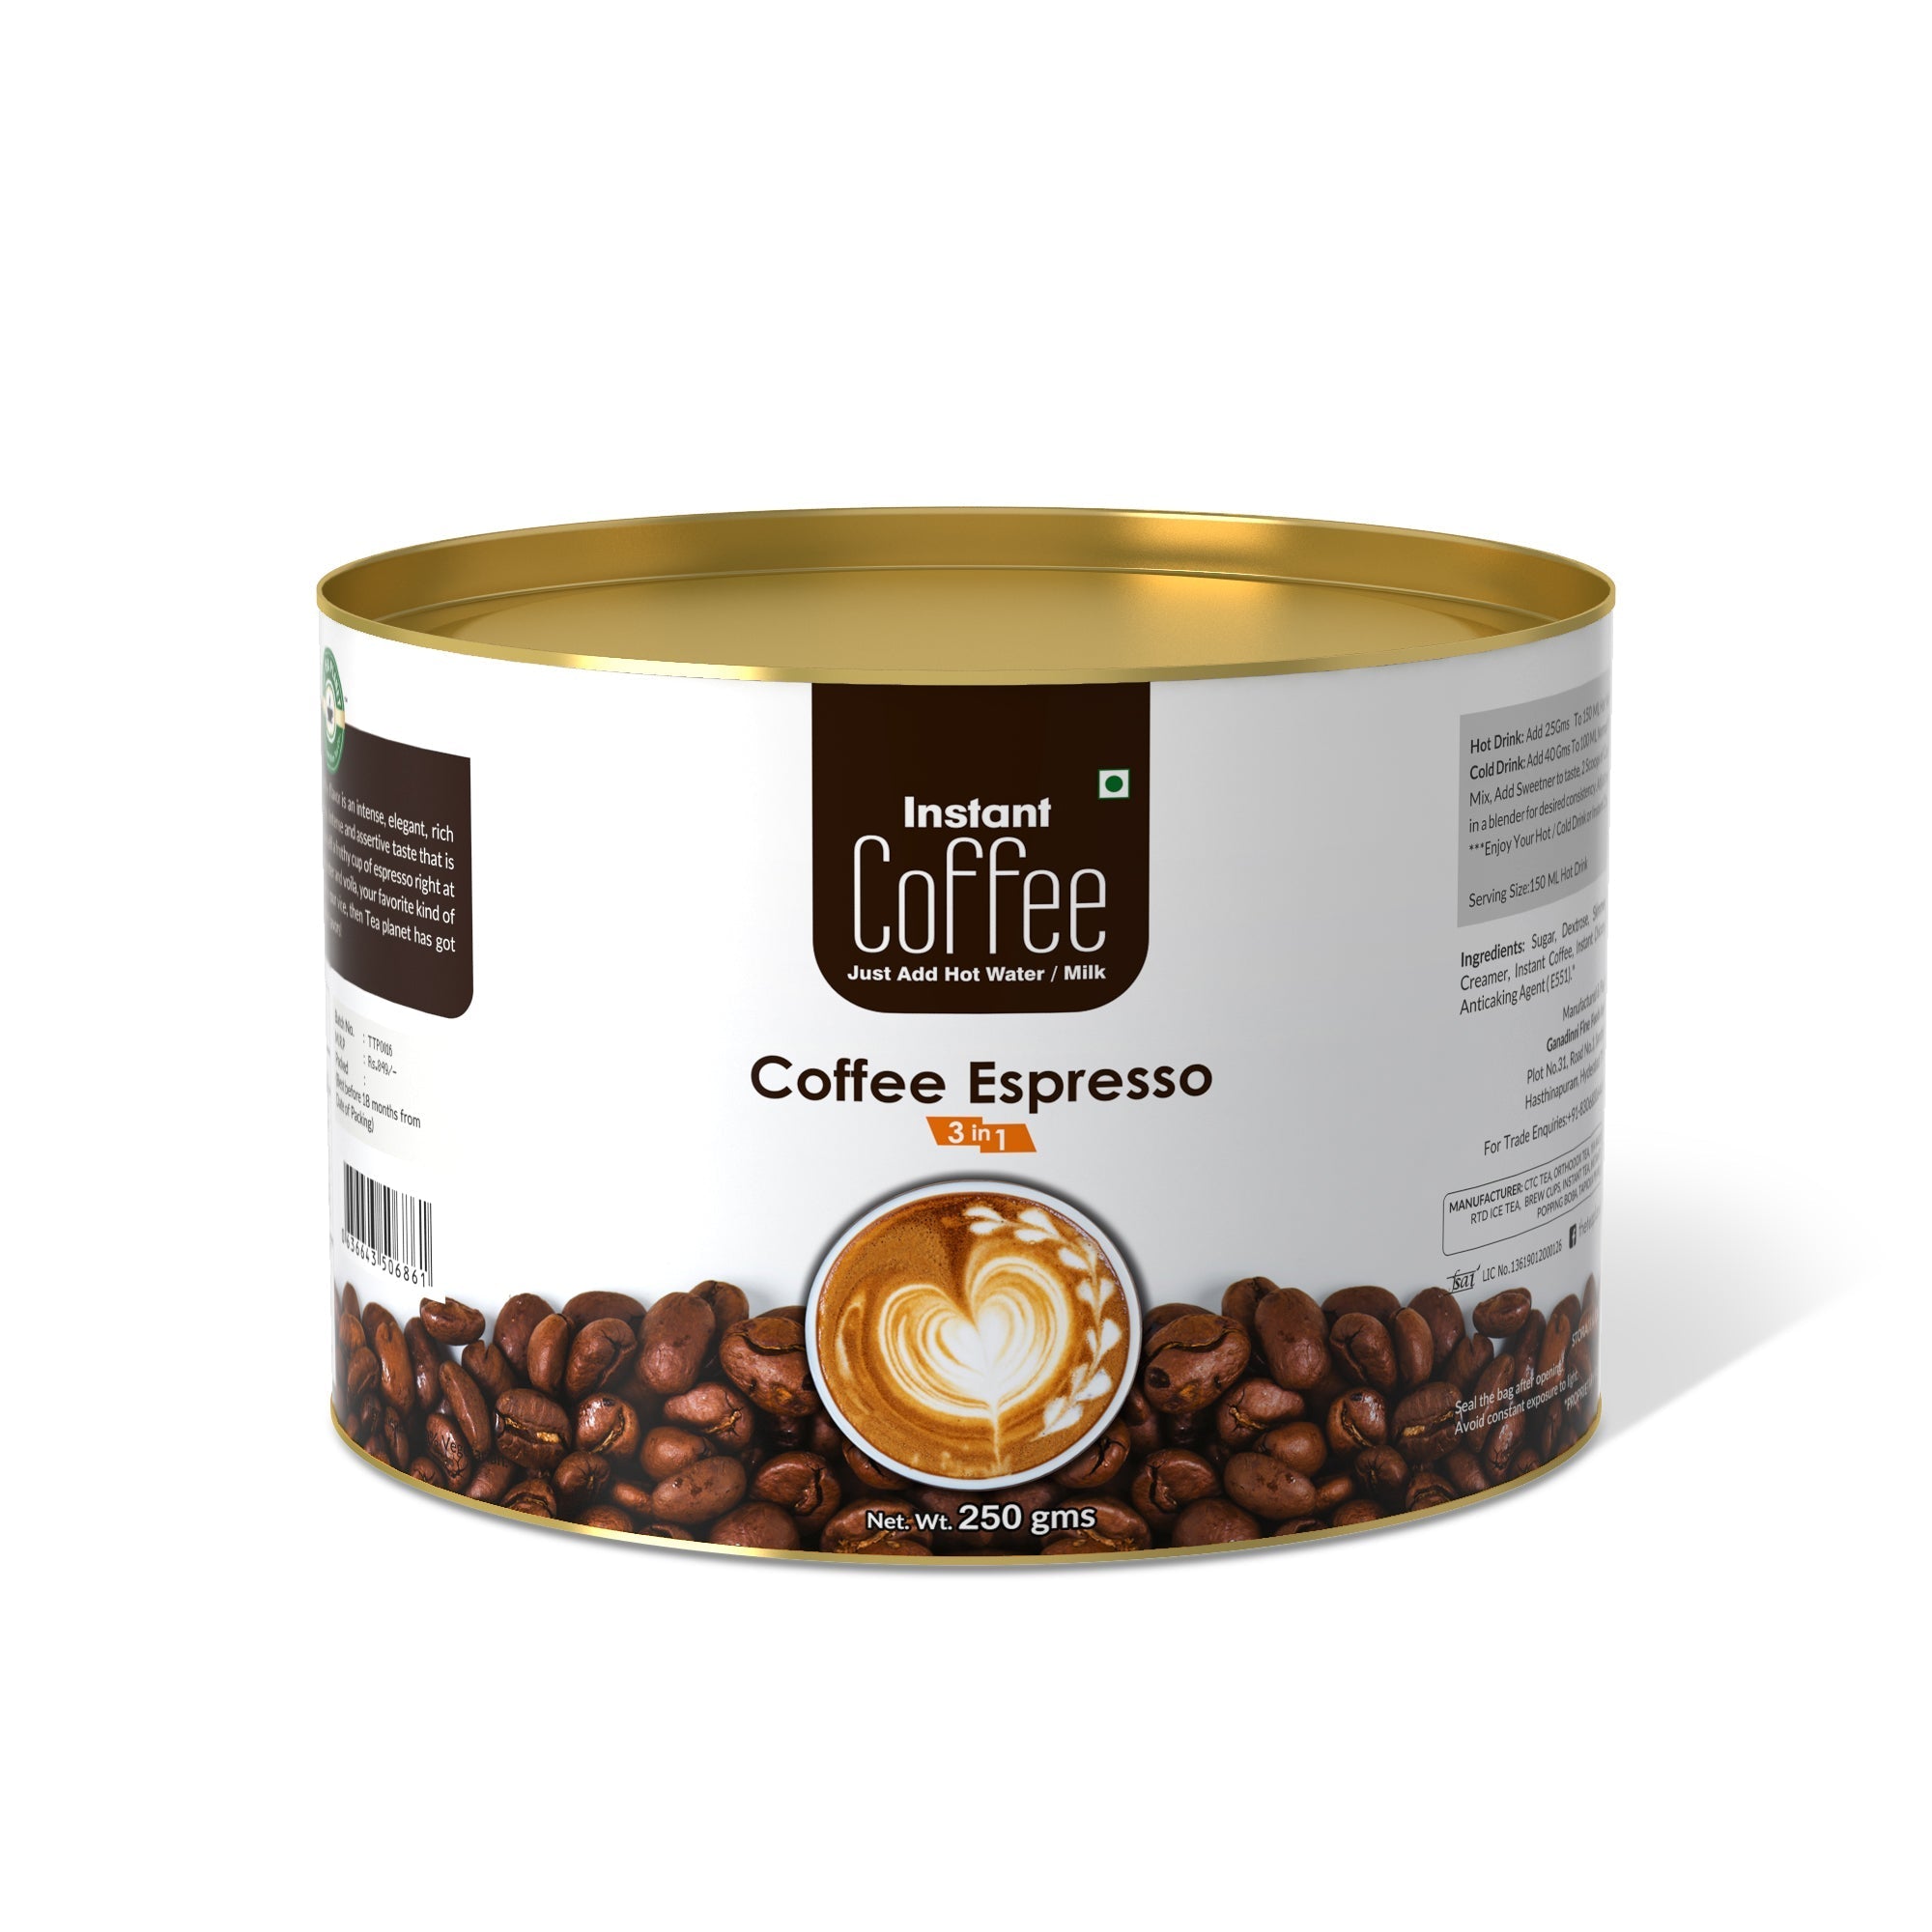 Coffee Espresso Instant Coffee Premix (3 in 1) - 400 gms